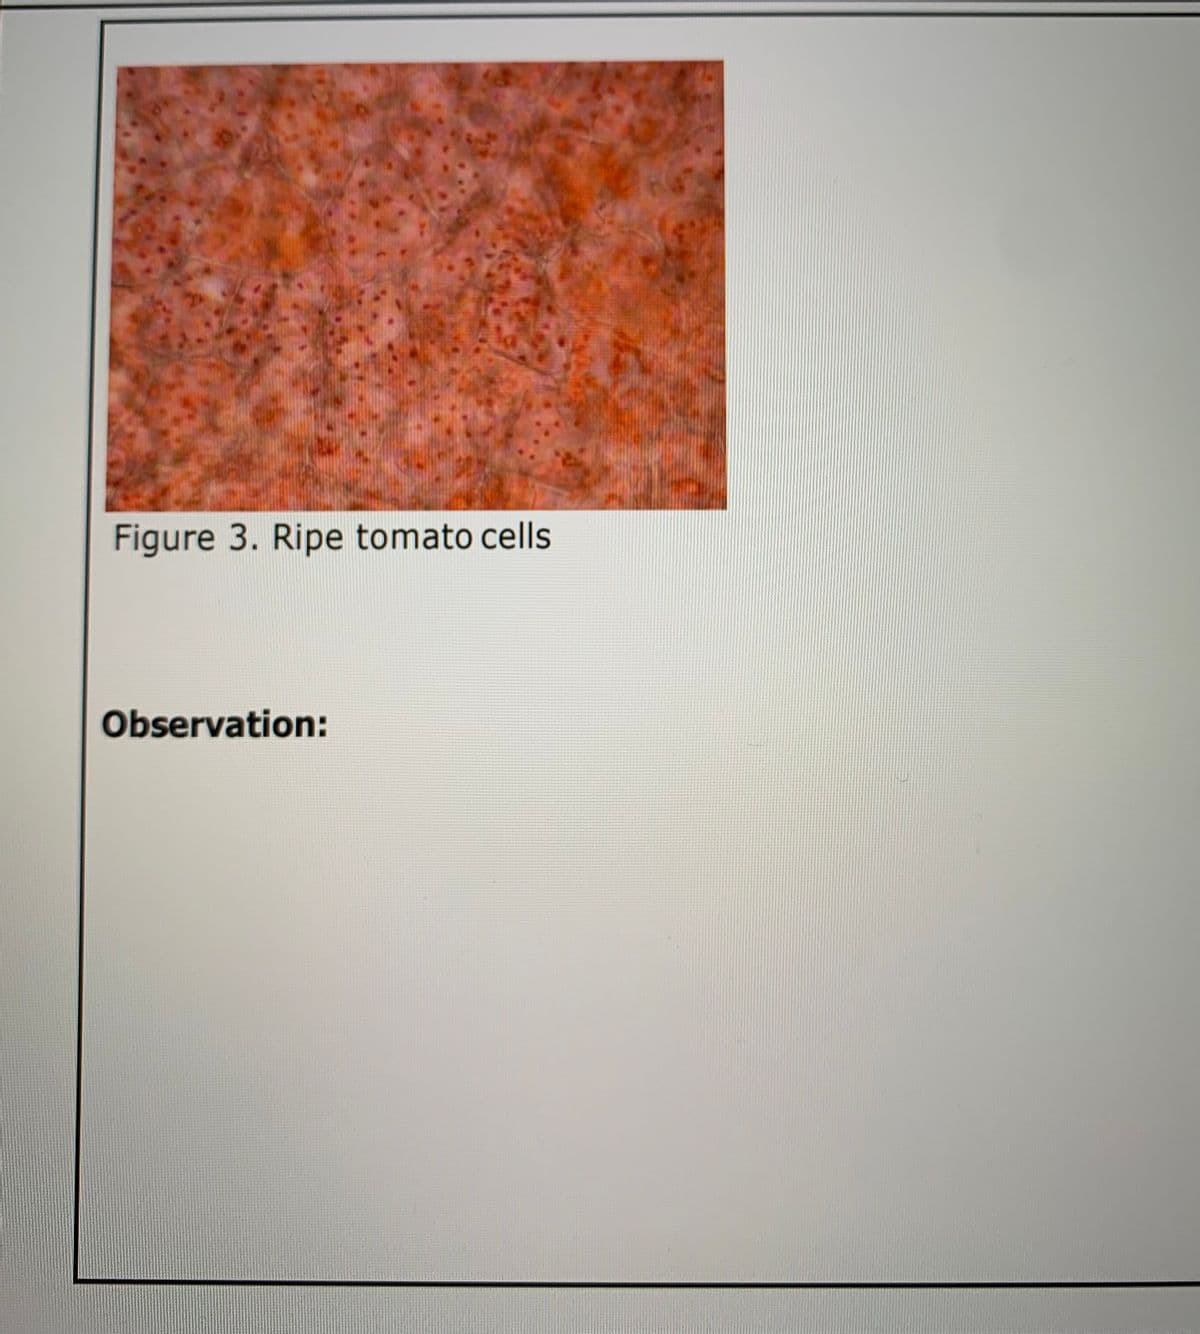 Figure 3. Ripe tomato cells
Observation:
